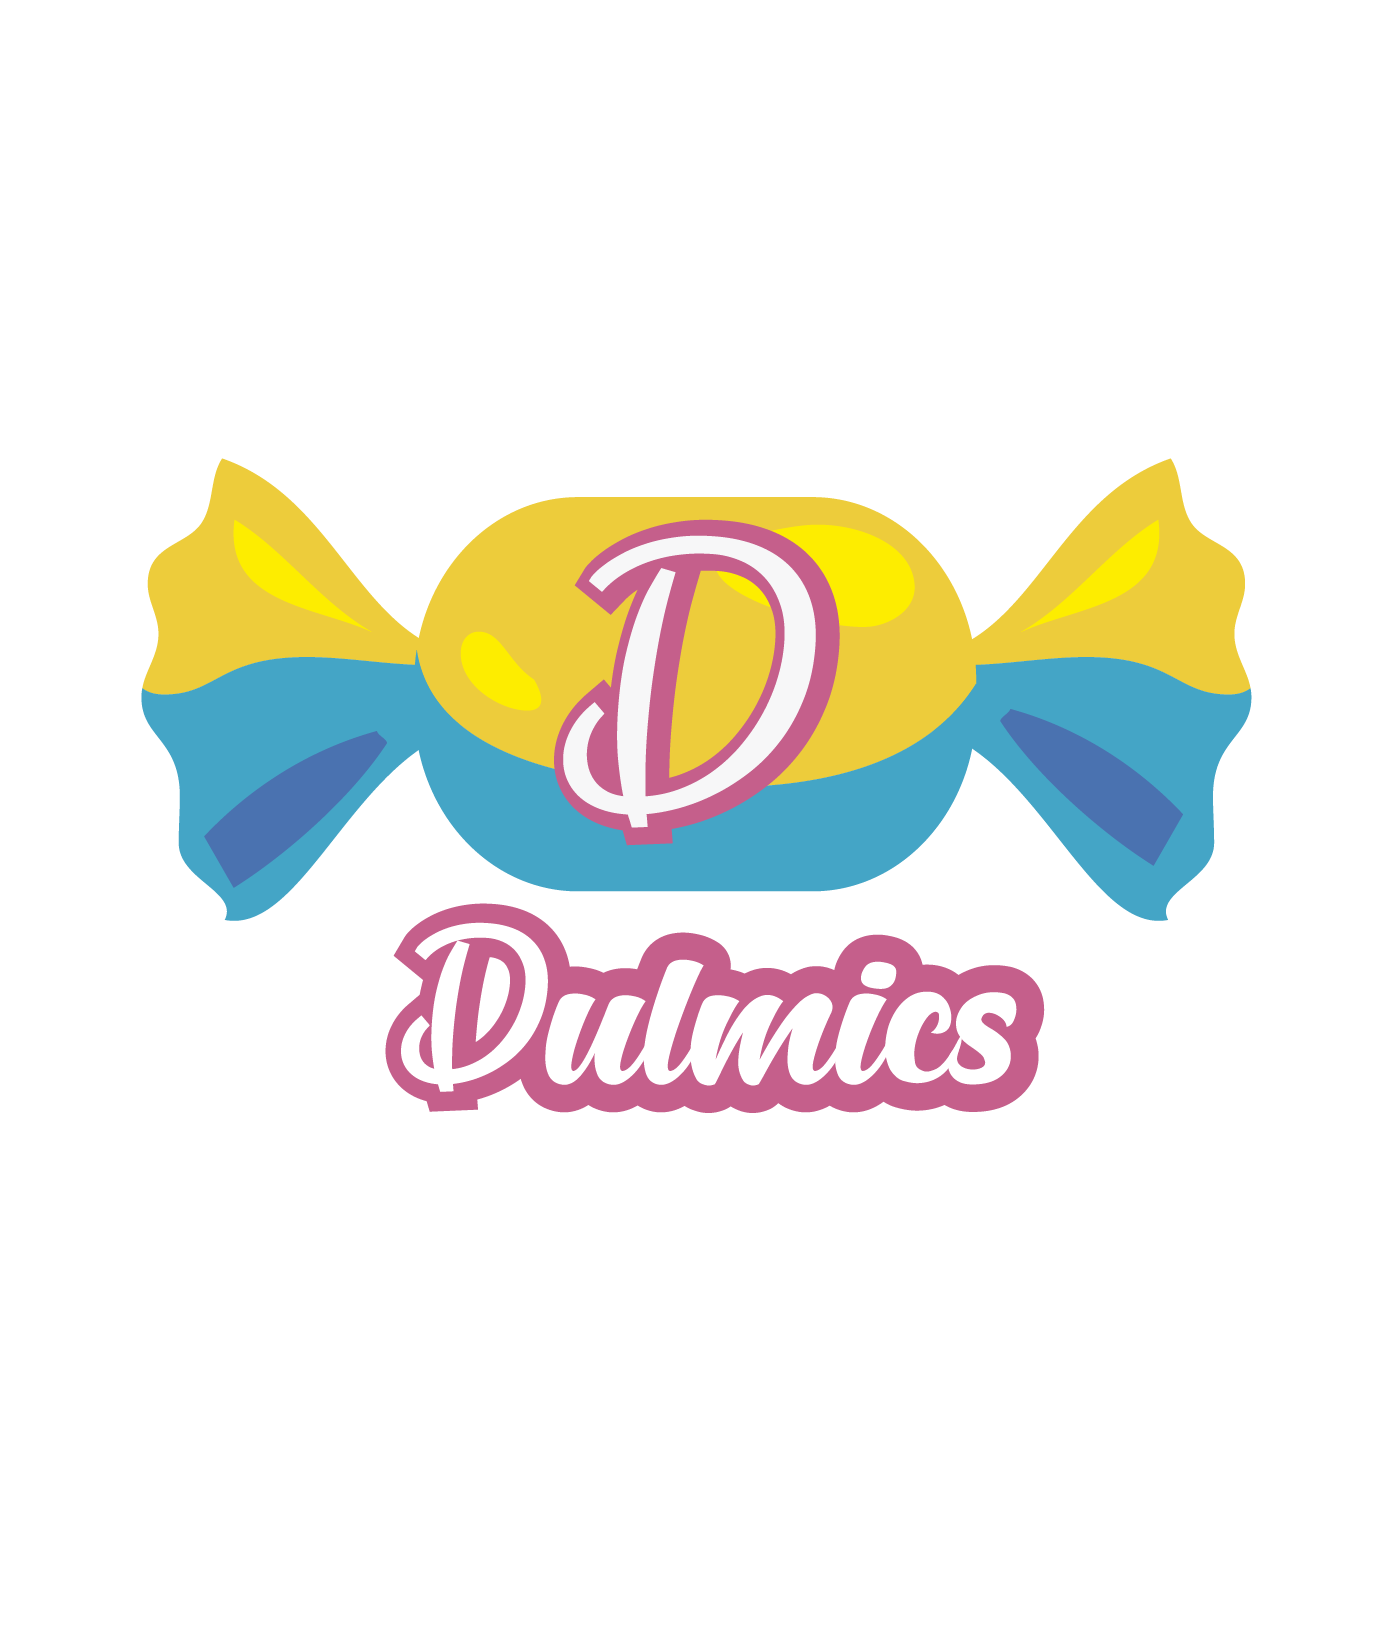 Dulmics